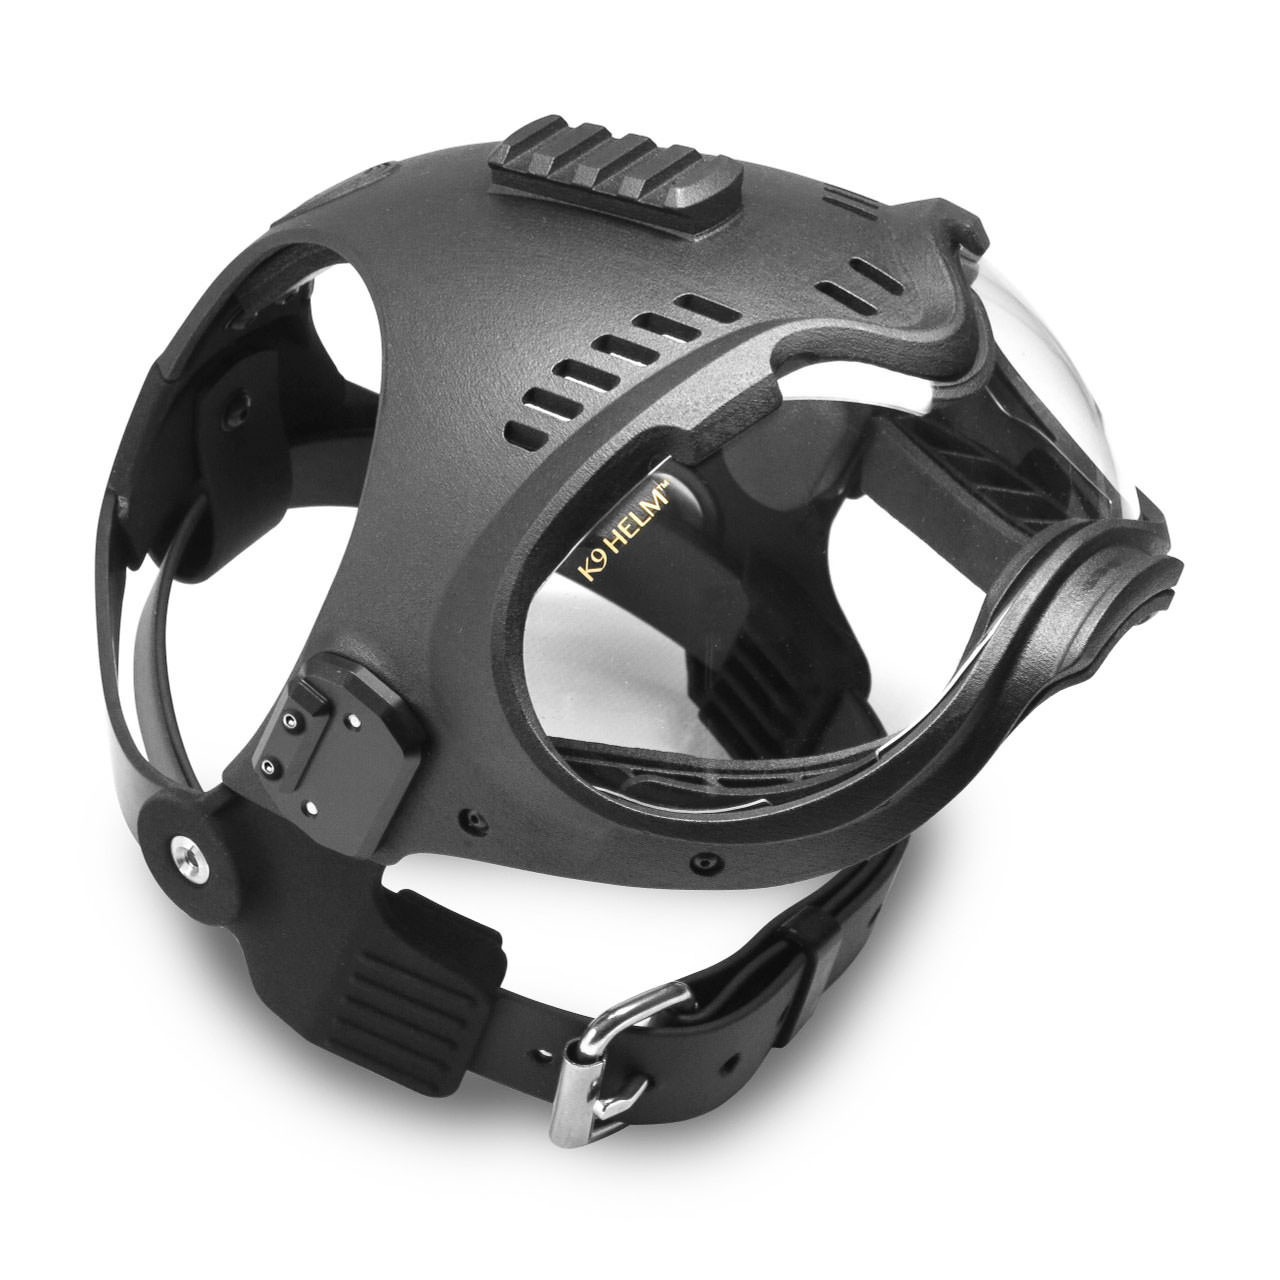 K9 Helm CS-1 GoggleHelm | Tactical Working Dog Helmet K9 Head Protection